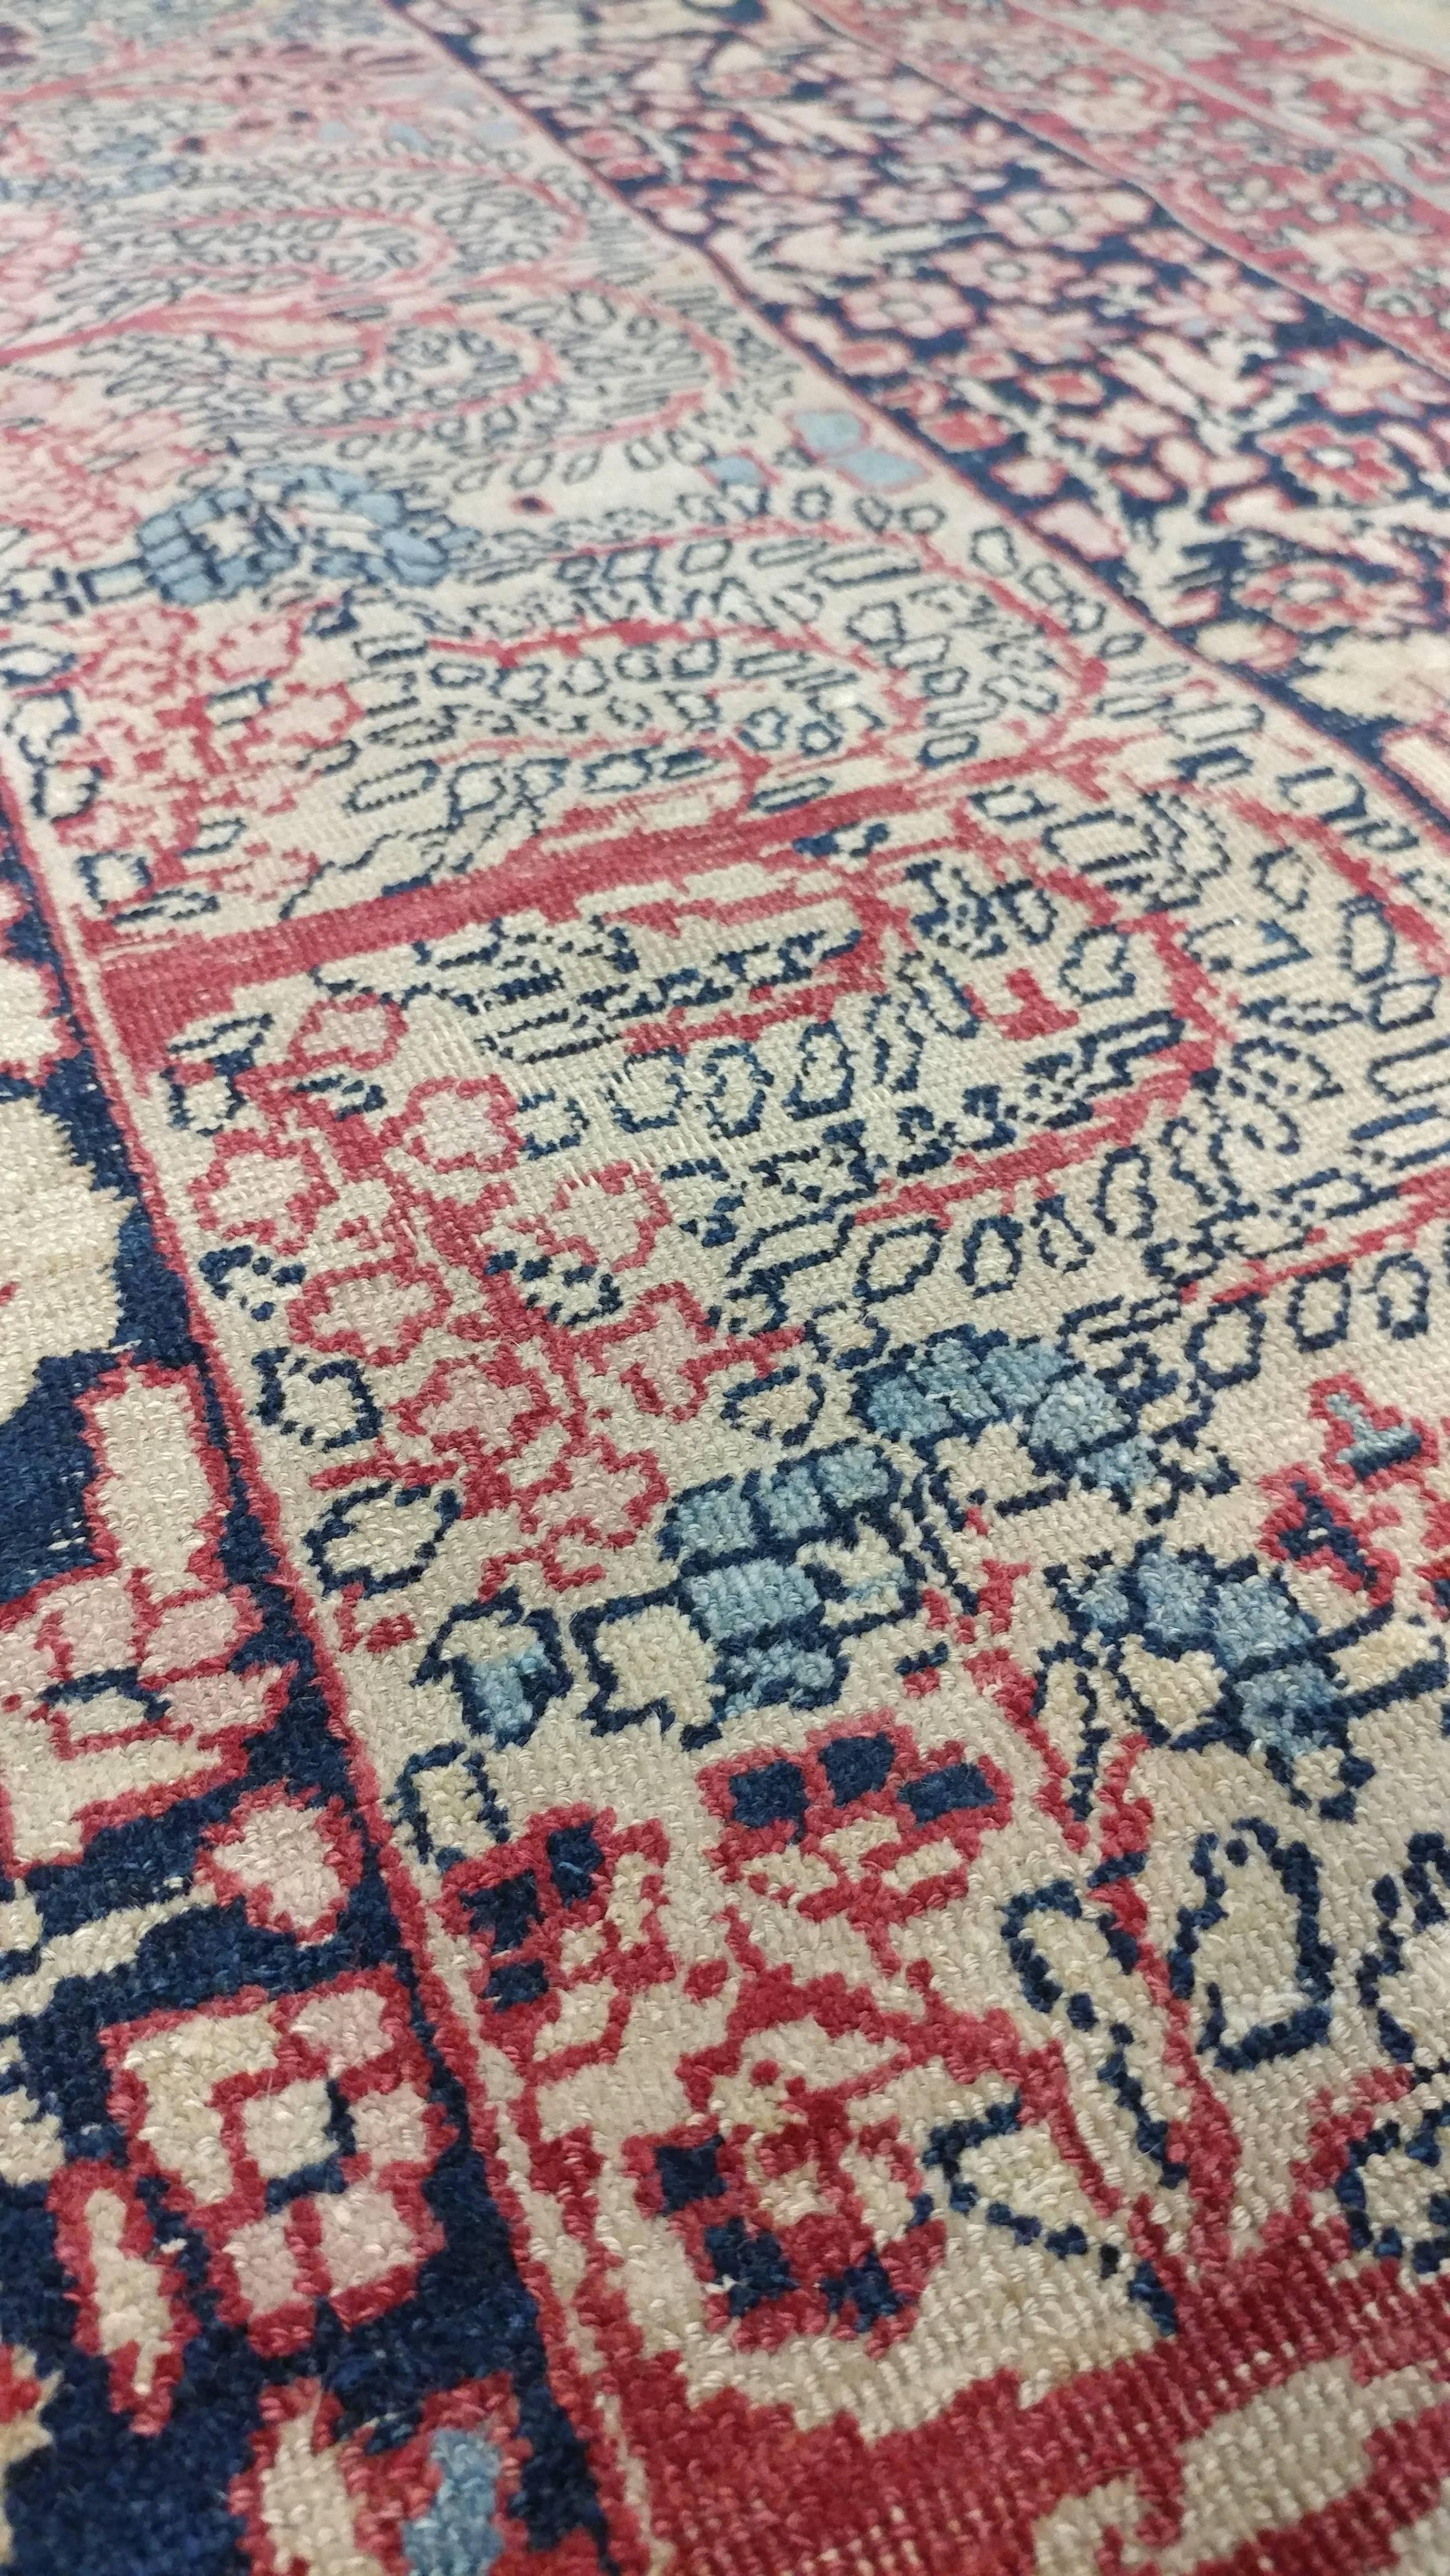 Hand-Knotted Antique Lavar Kerman Carpet, Handmade Wool Carpet, Multi-Color, Ivory, Red Wine For Sale